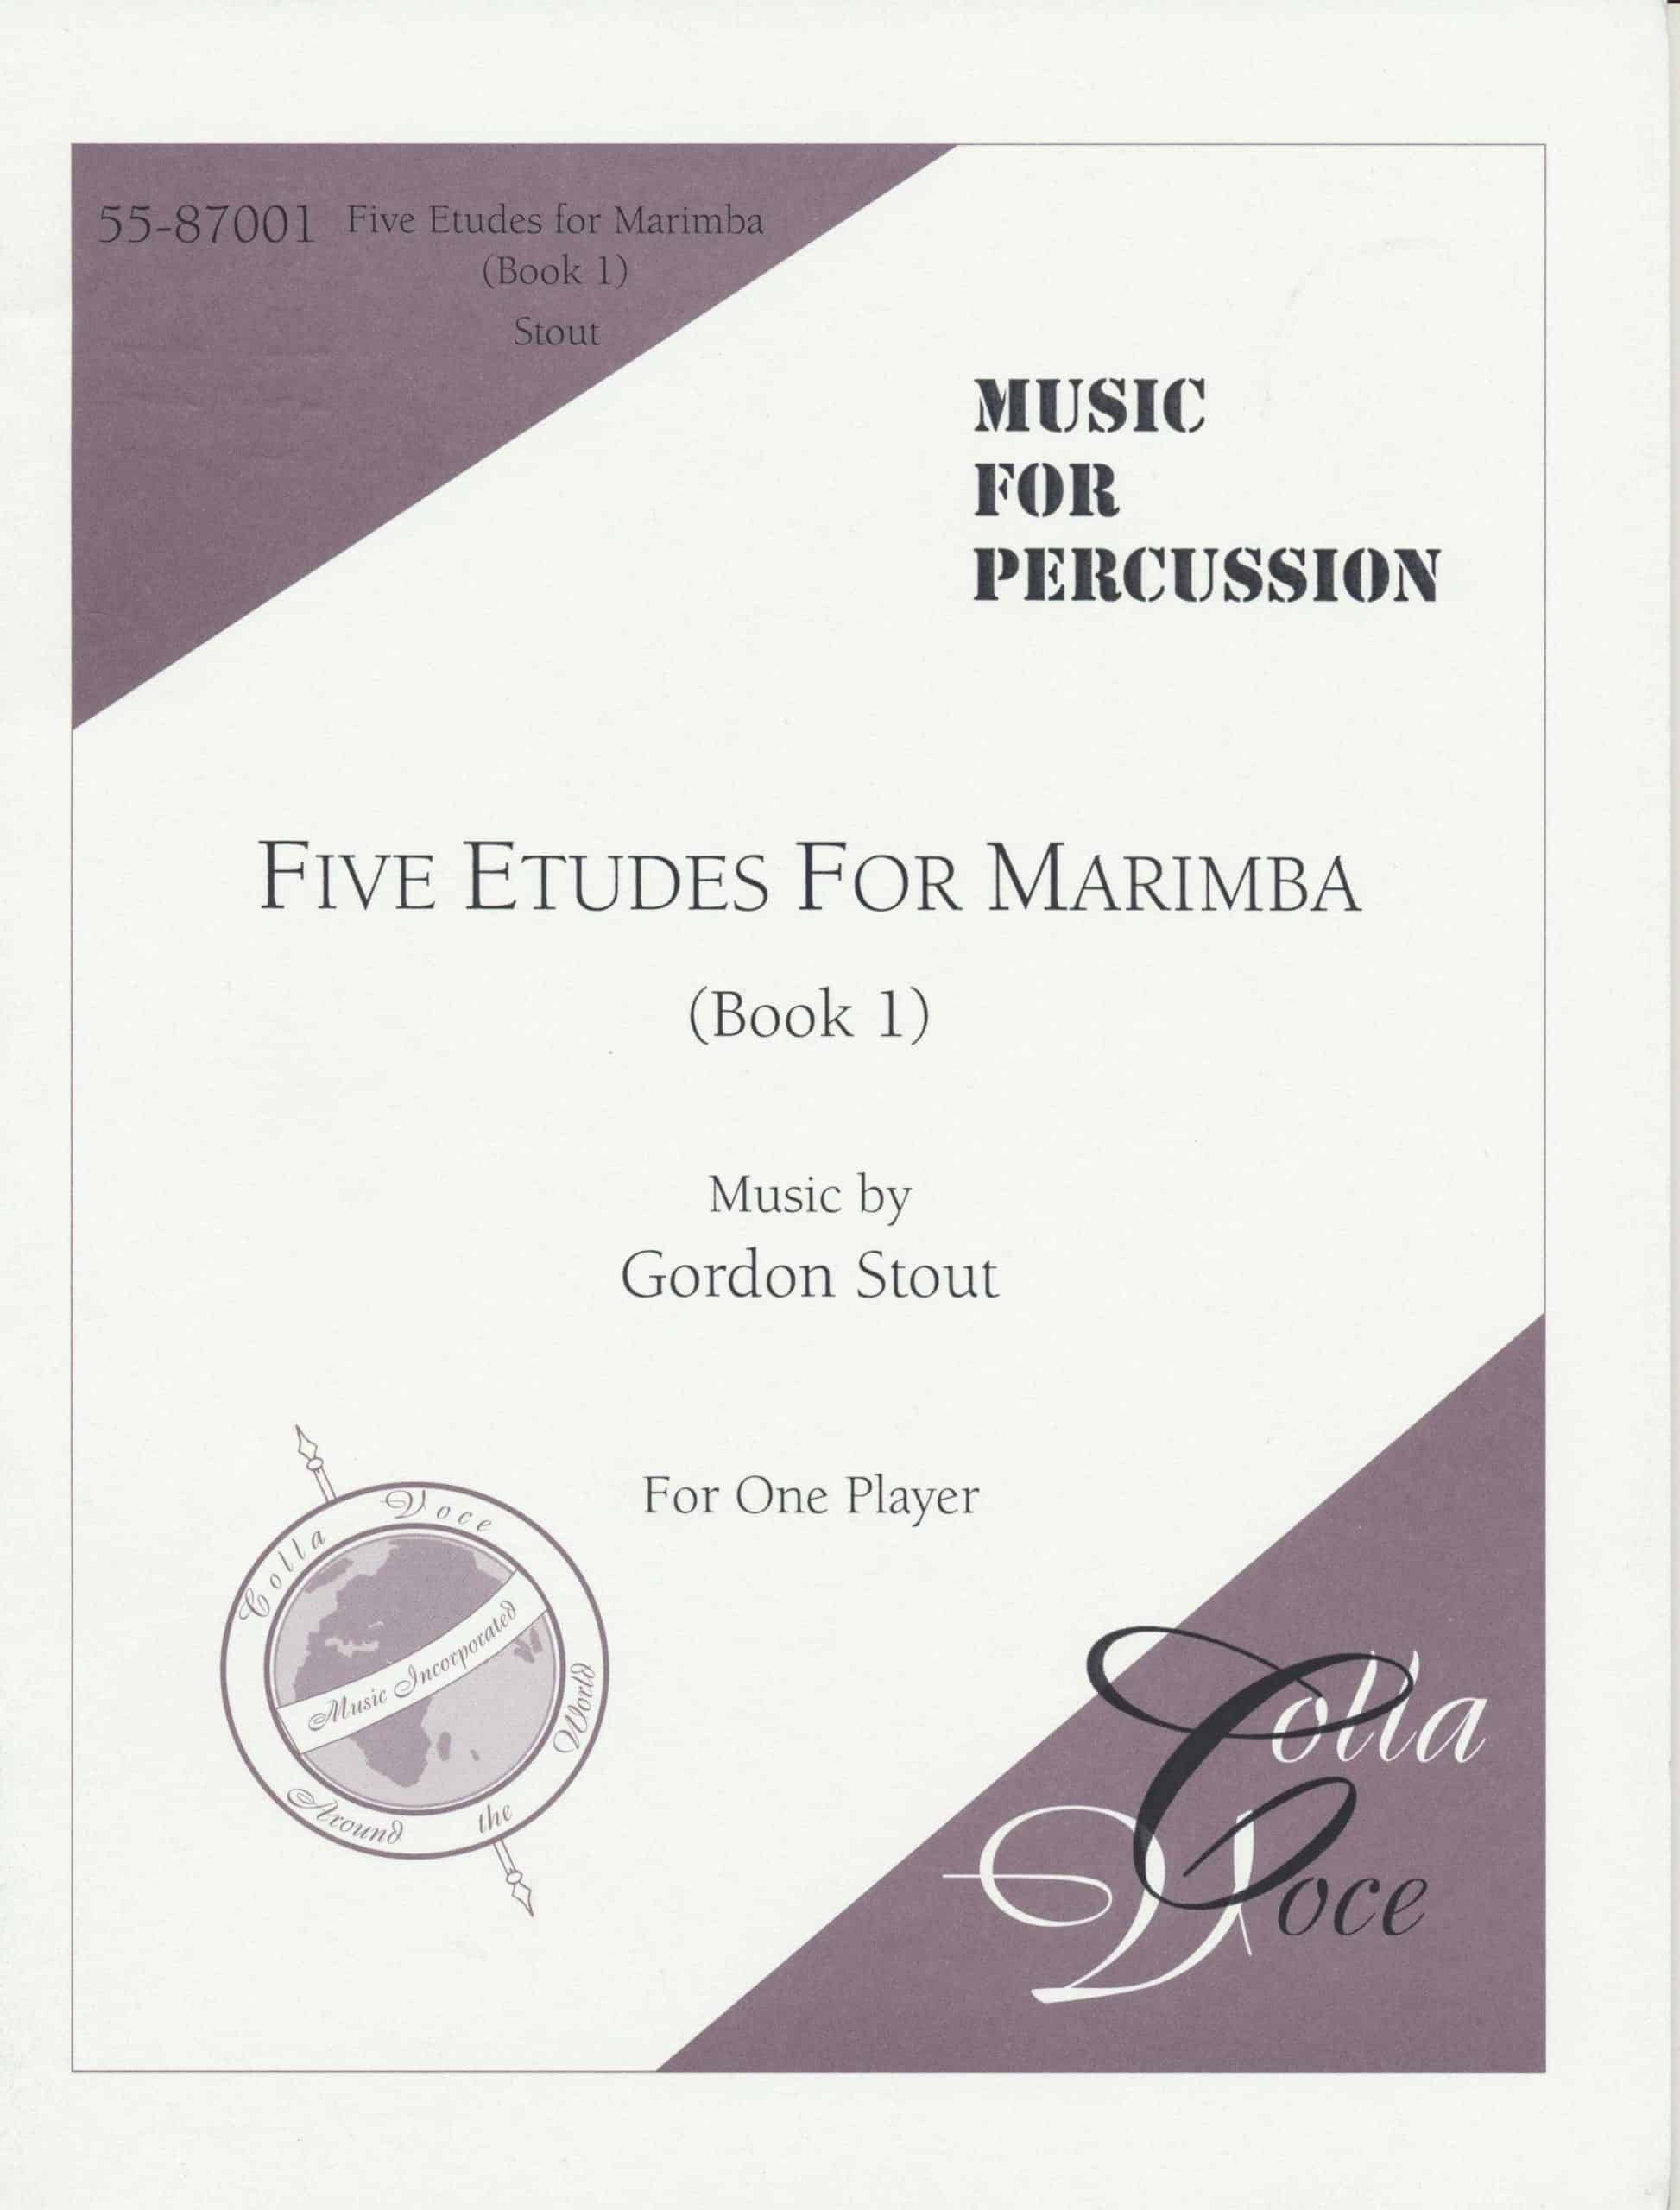 Five Etudes For Marimba Book 1 by Gordon Stout